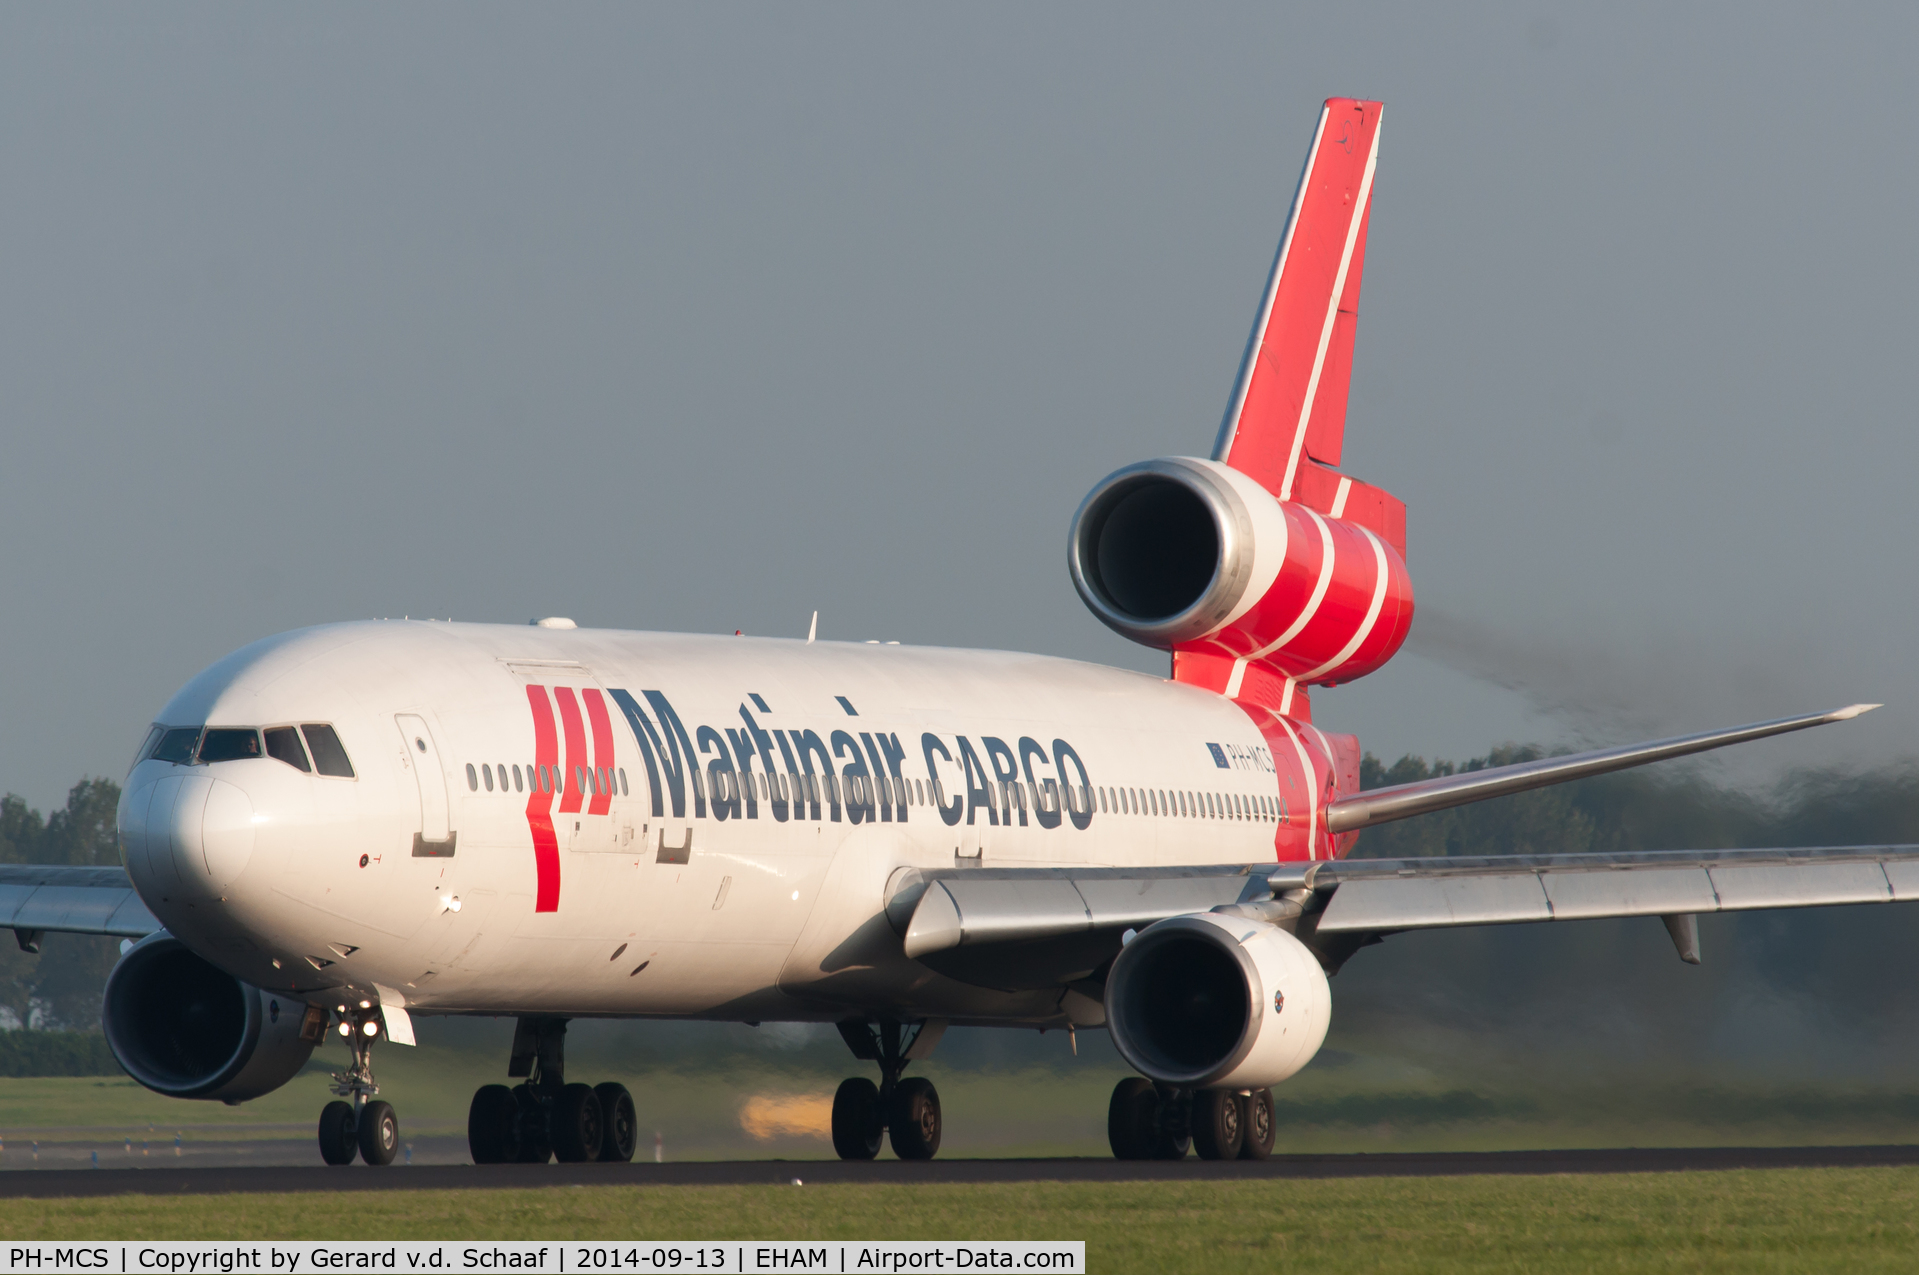 PH-MCS, 1995 McDonnell Douglas MD-11F C/N 48618, Schiphol, September 2014